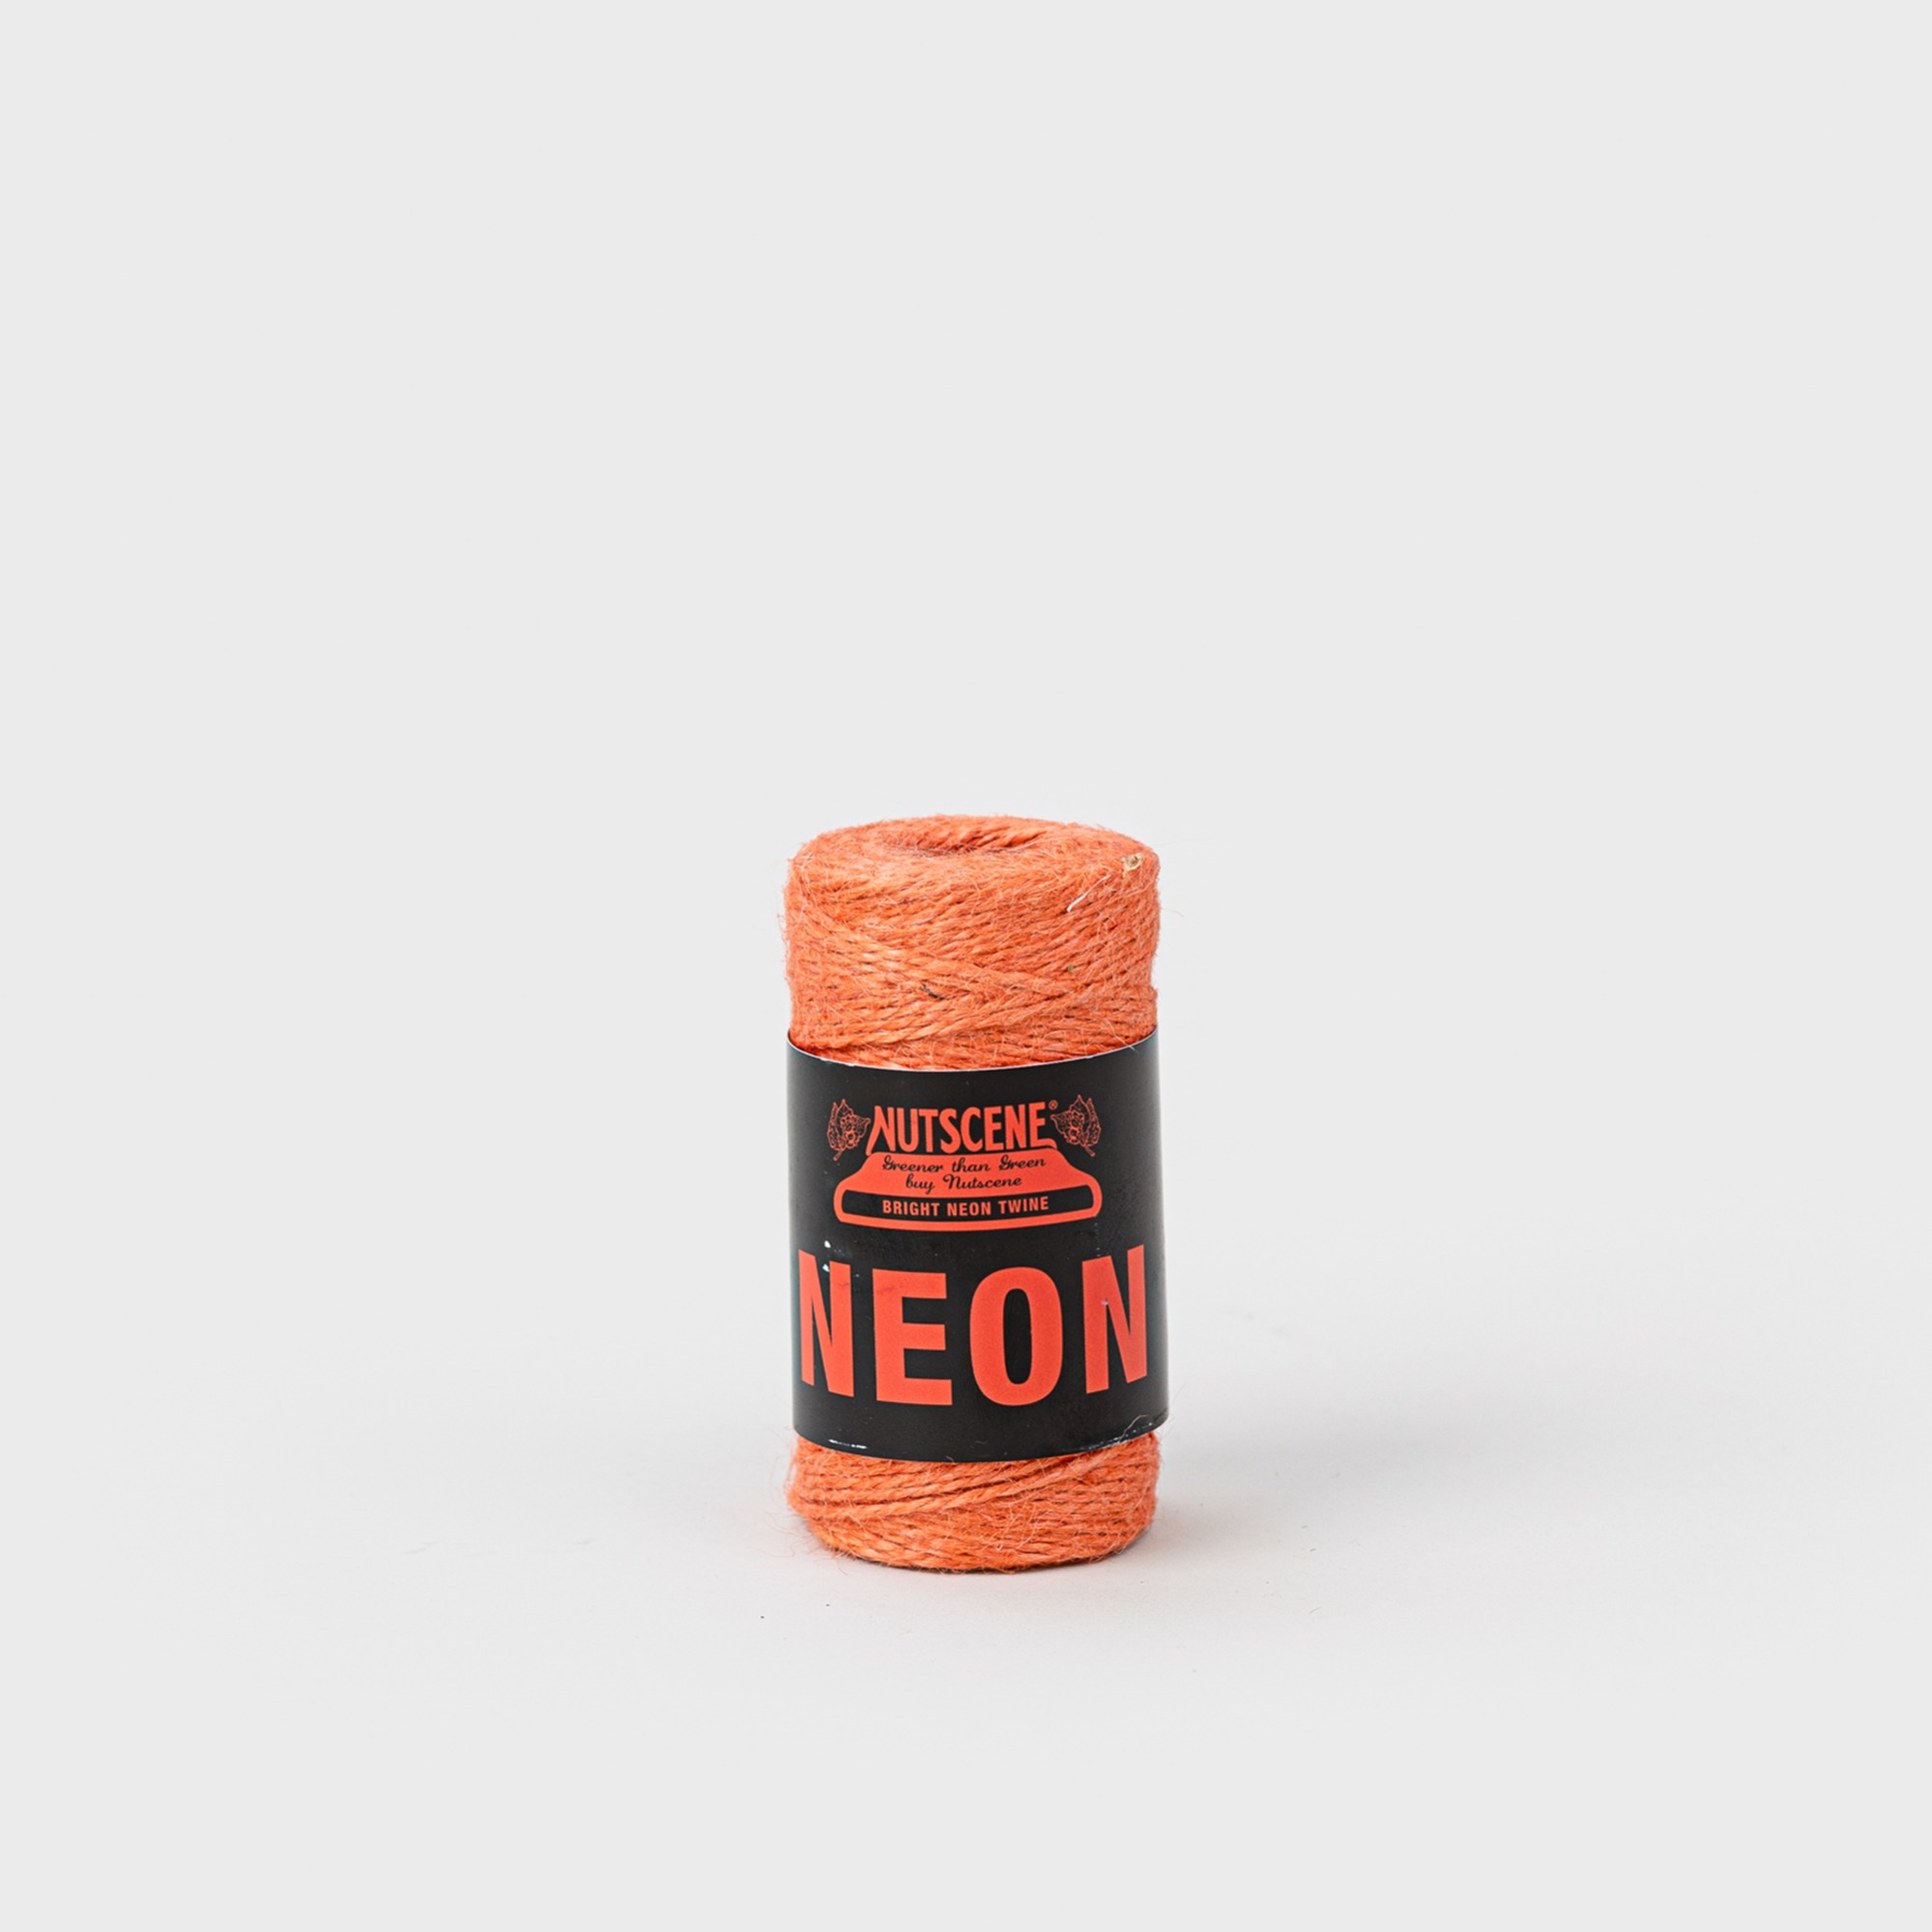 Nutscene Neon Spools 90M - Orange